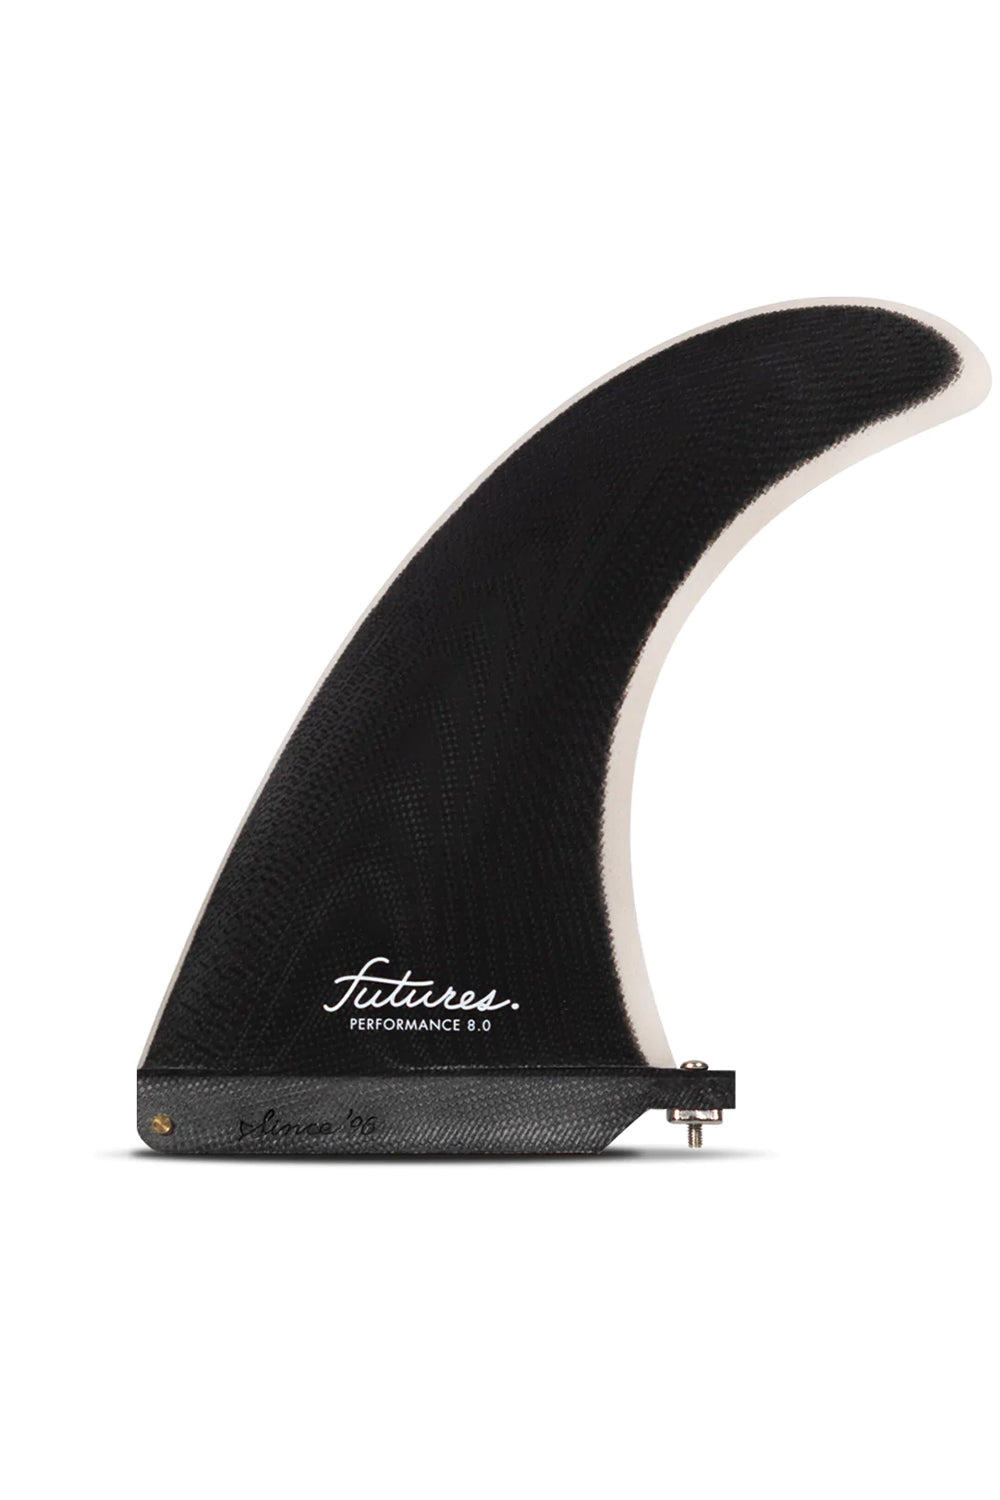 Futures Fins Performance 8.0 Fibreglass Single Longboard Fin - Black/Grey